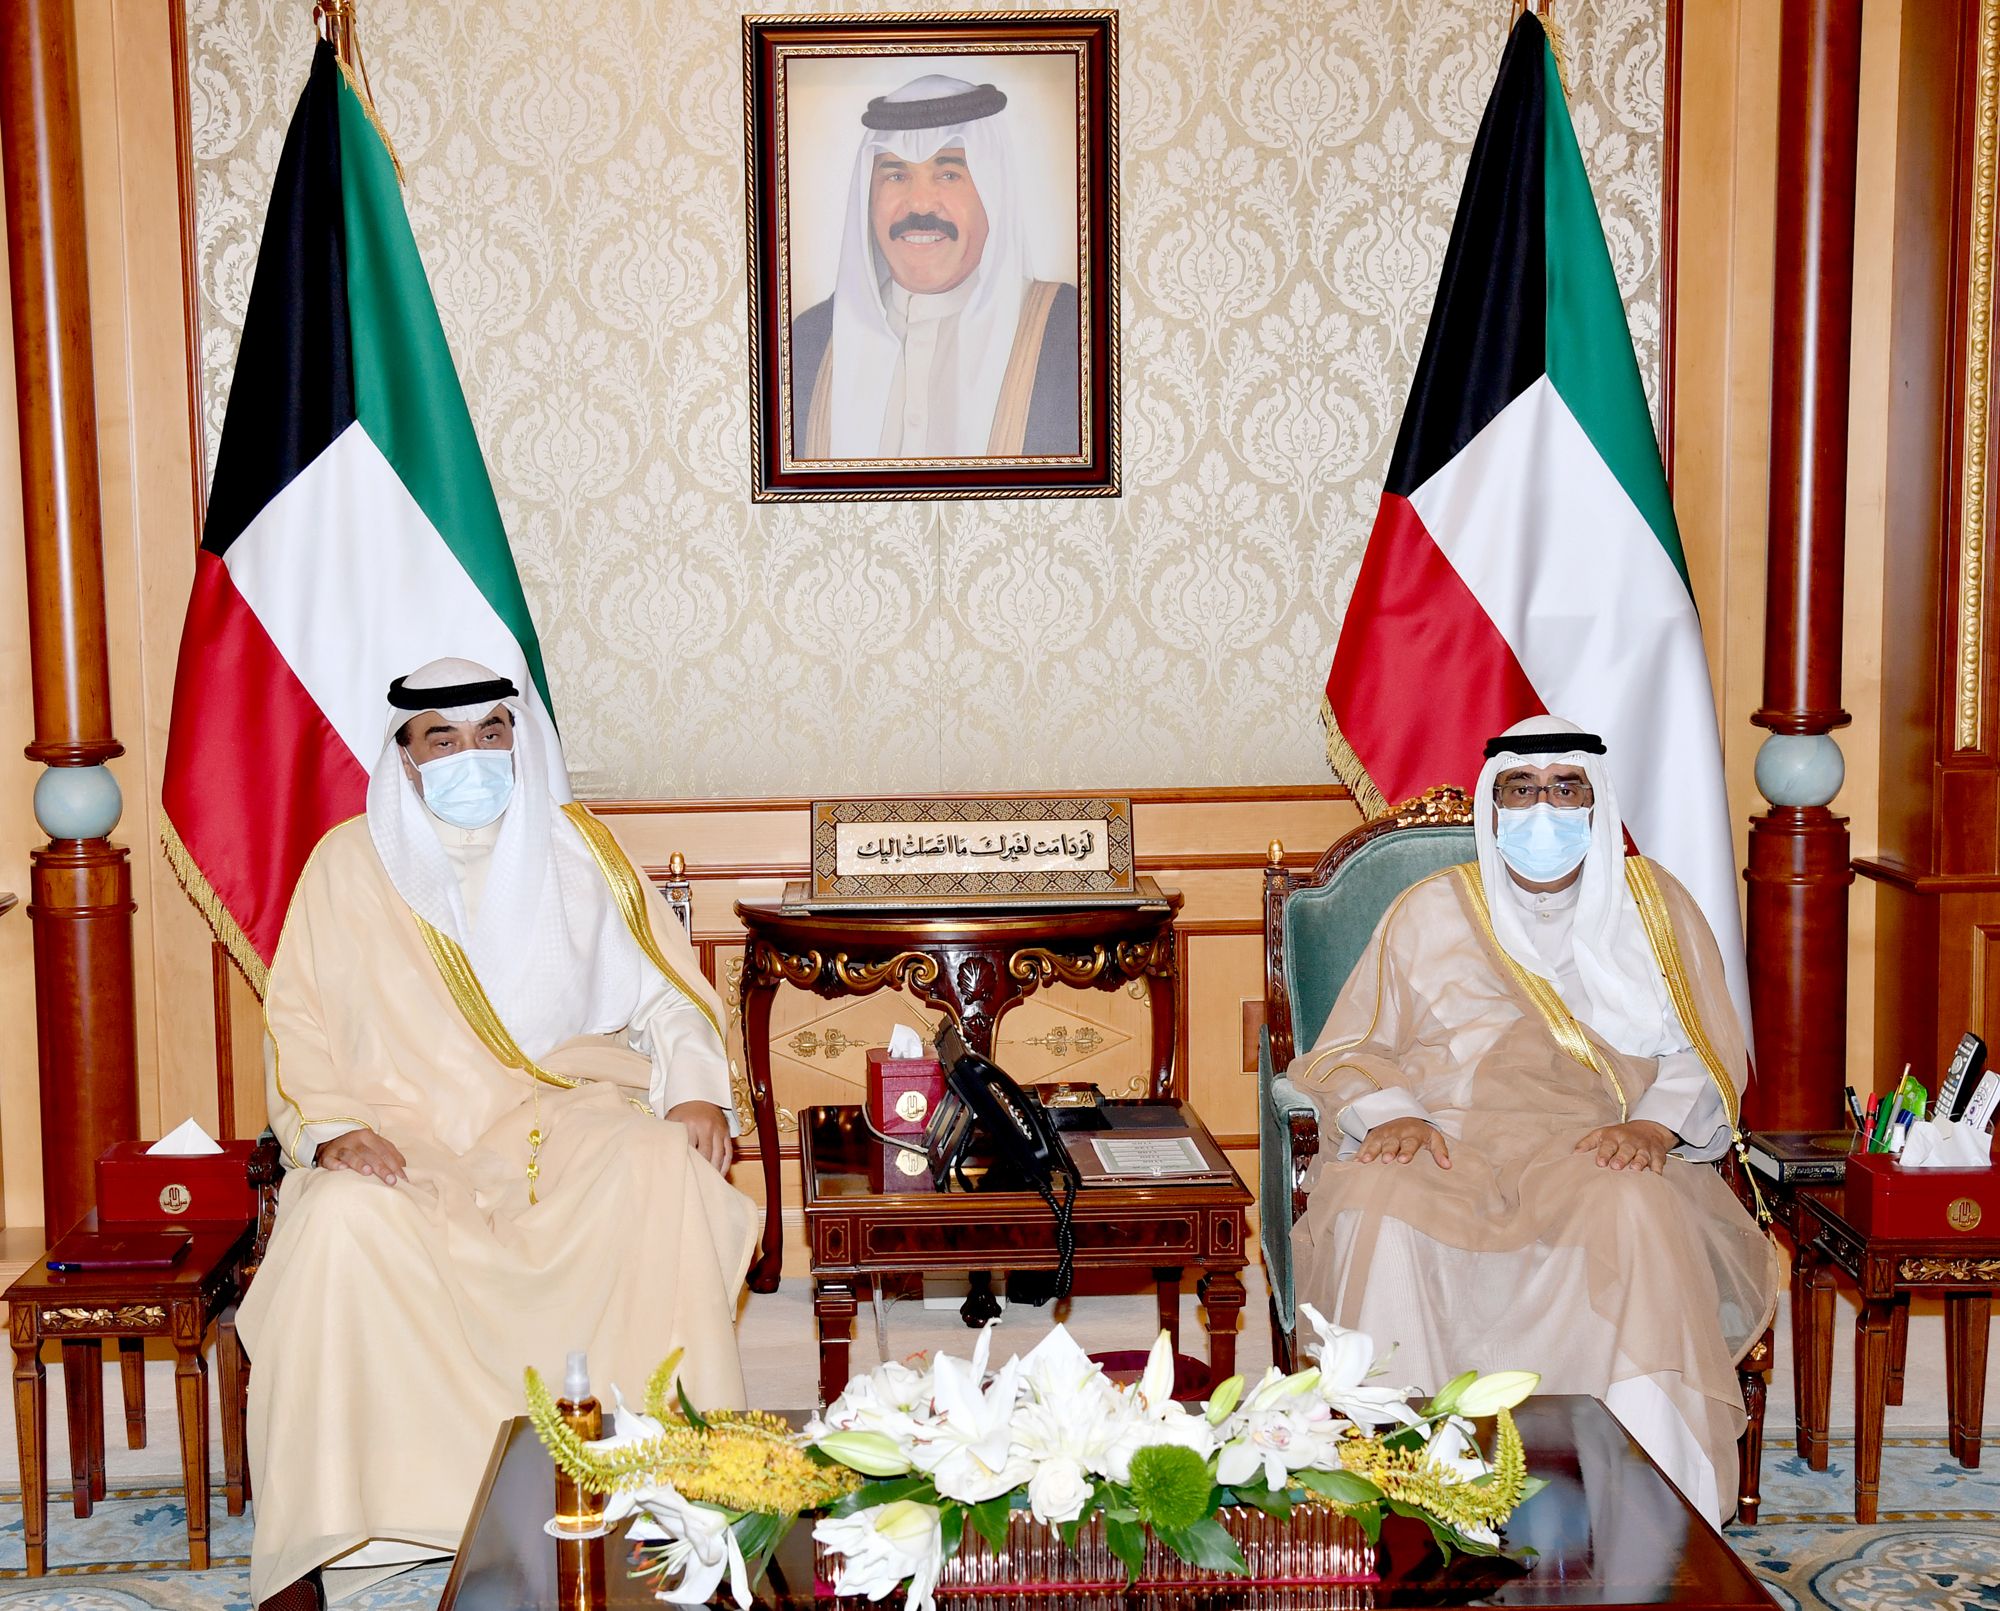 His Highness the Crown Prince  received His Highness the Prime Minister Sheikh Sabah Khaled Al-Hamad Al-Sabah